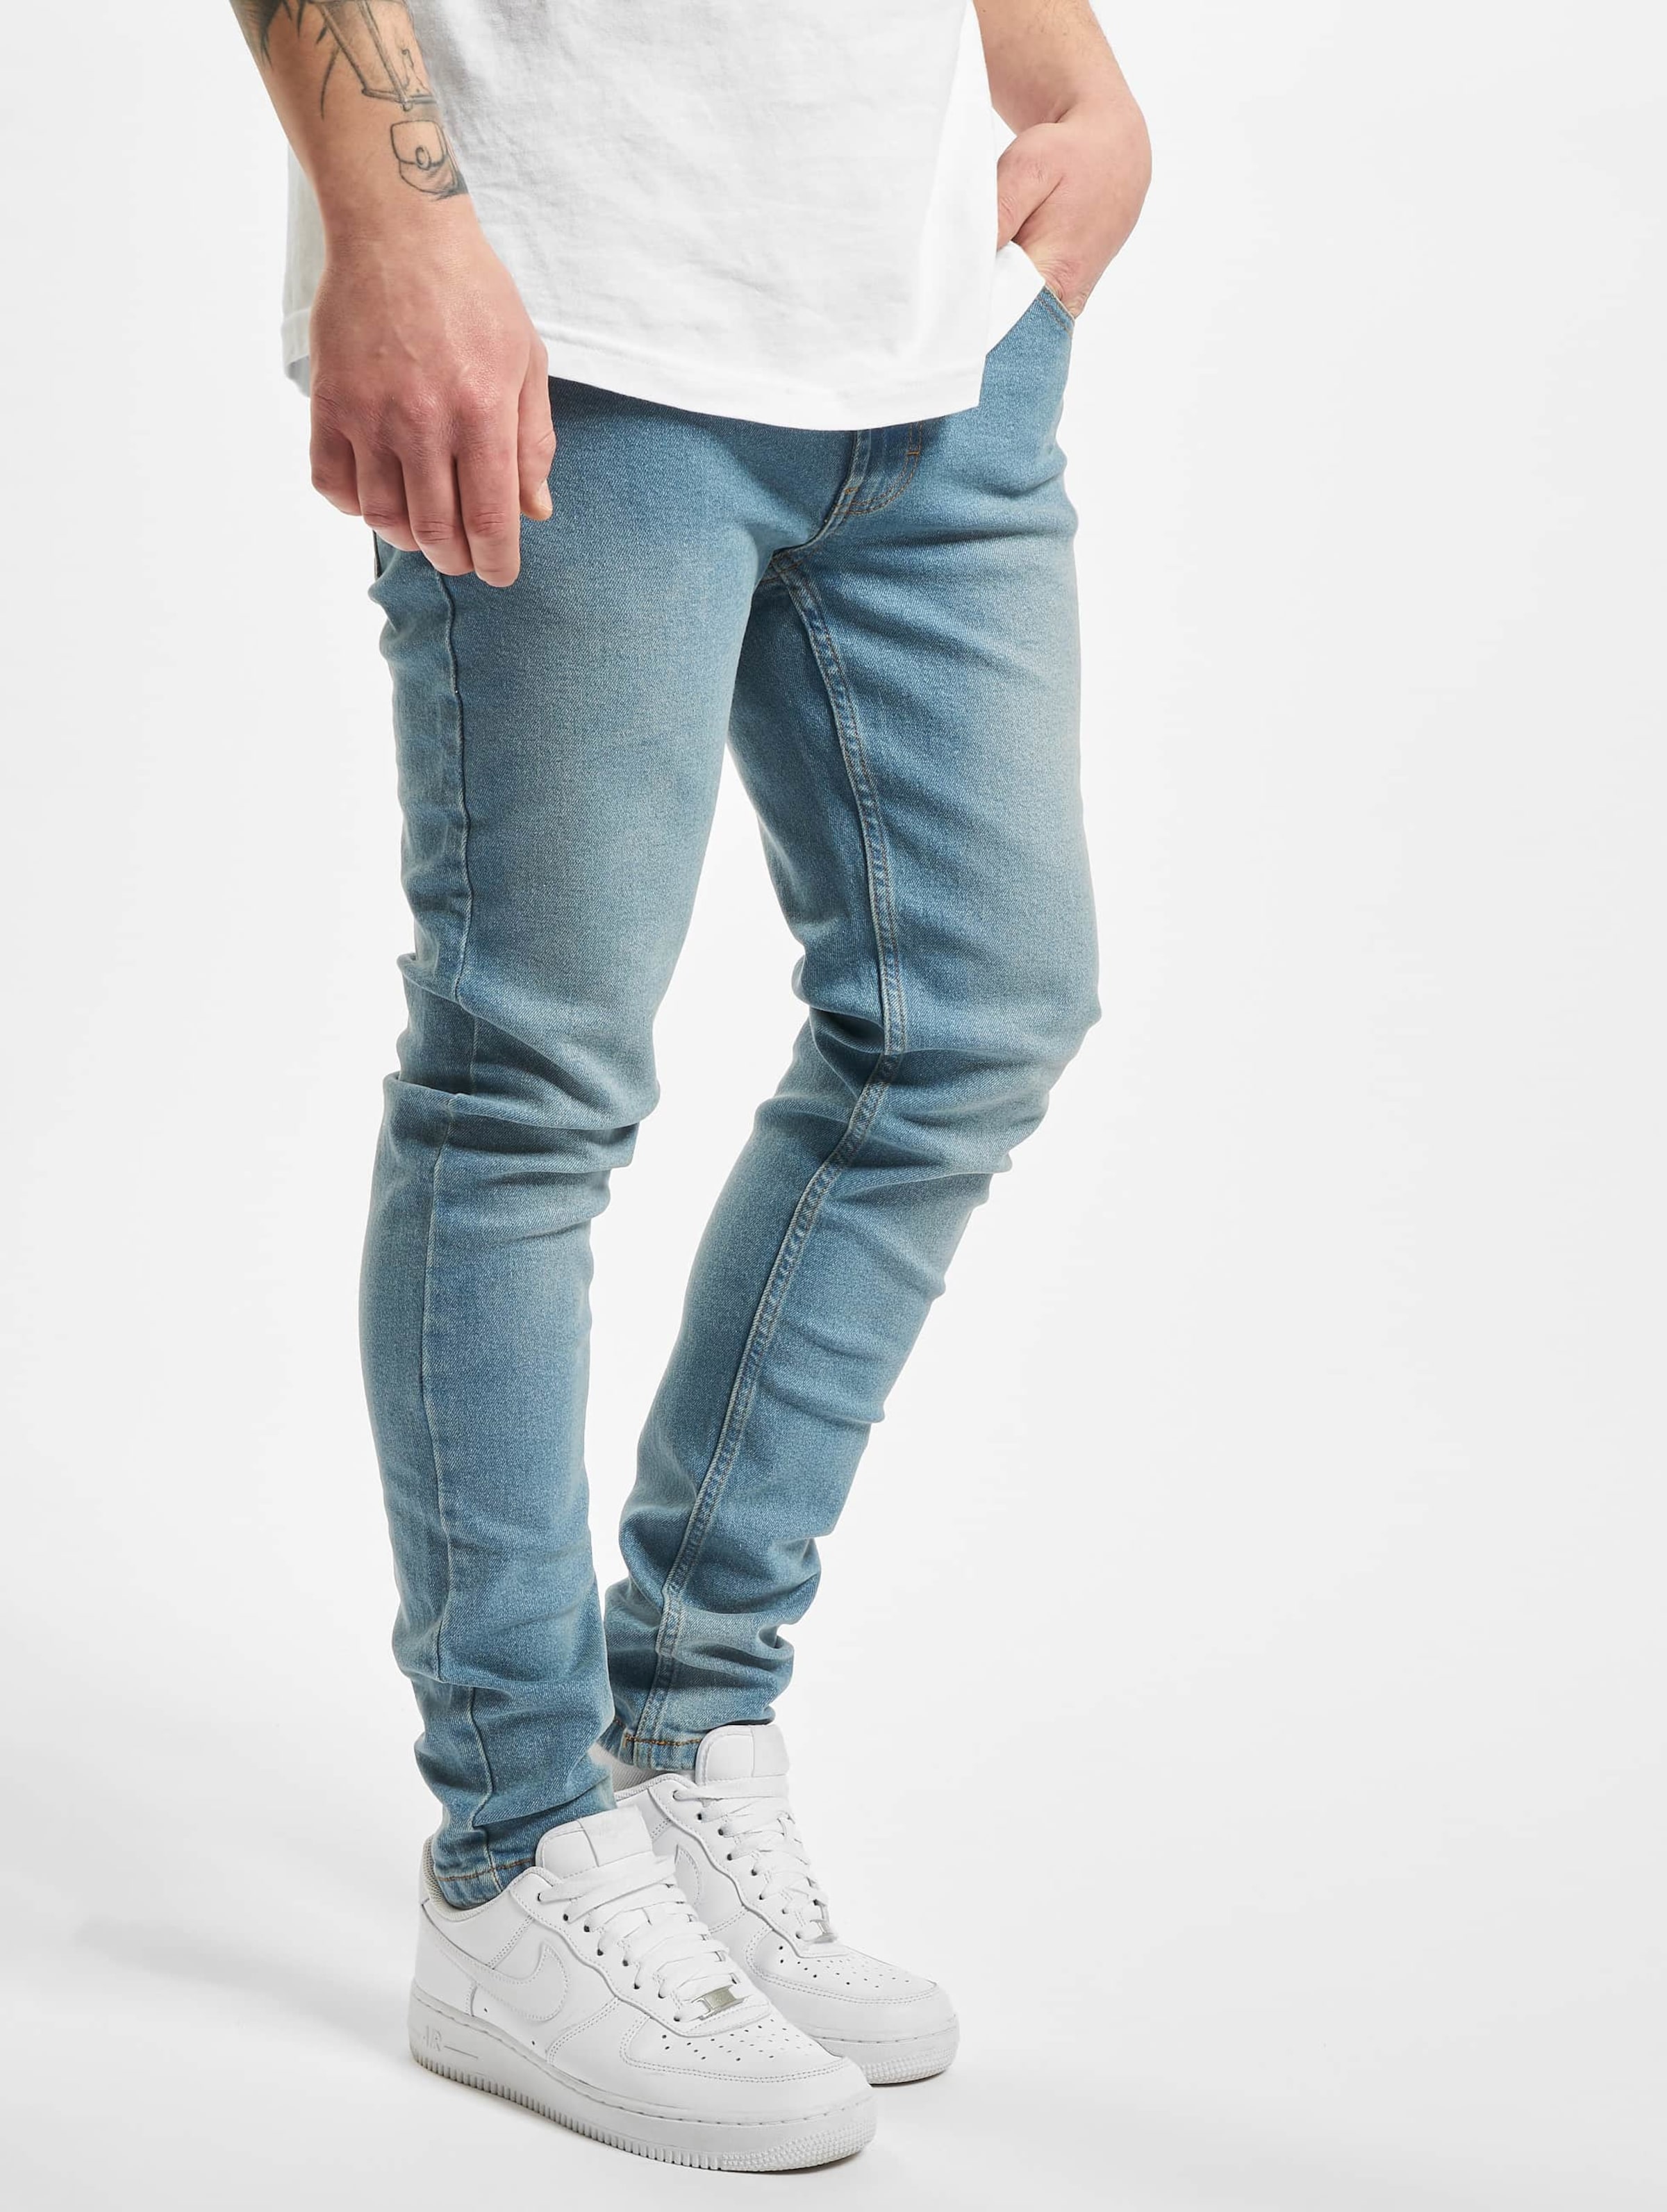 Denim Project Mr. Red Skinny Jeans Mannen op kleur blauw, Maat 3430